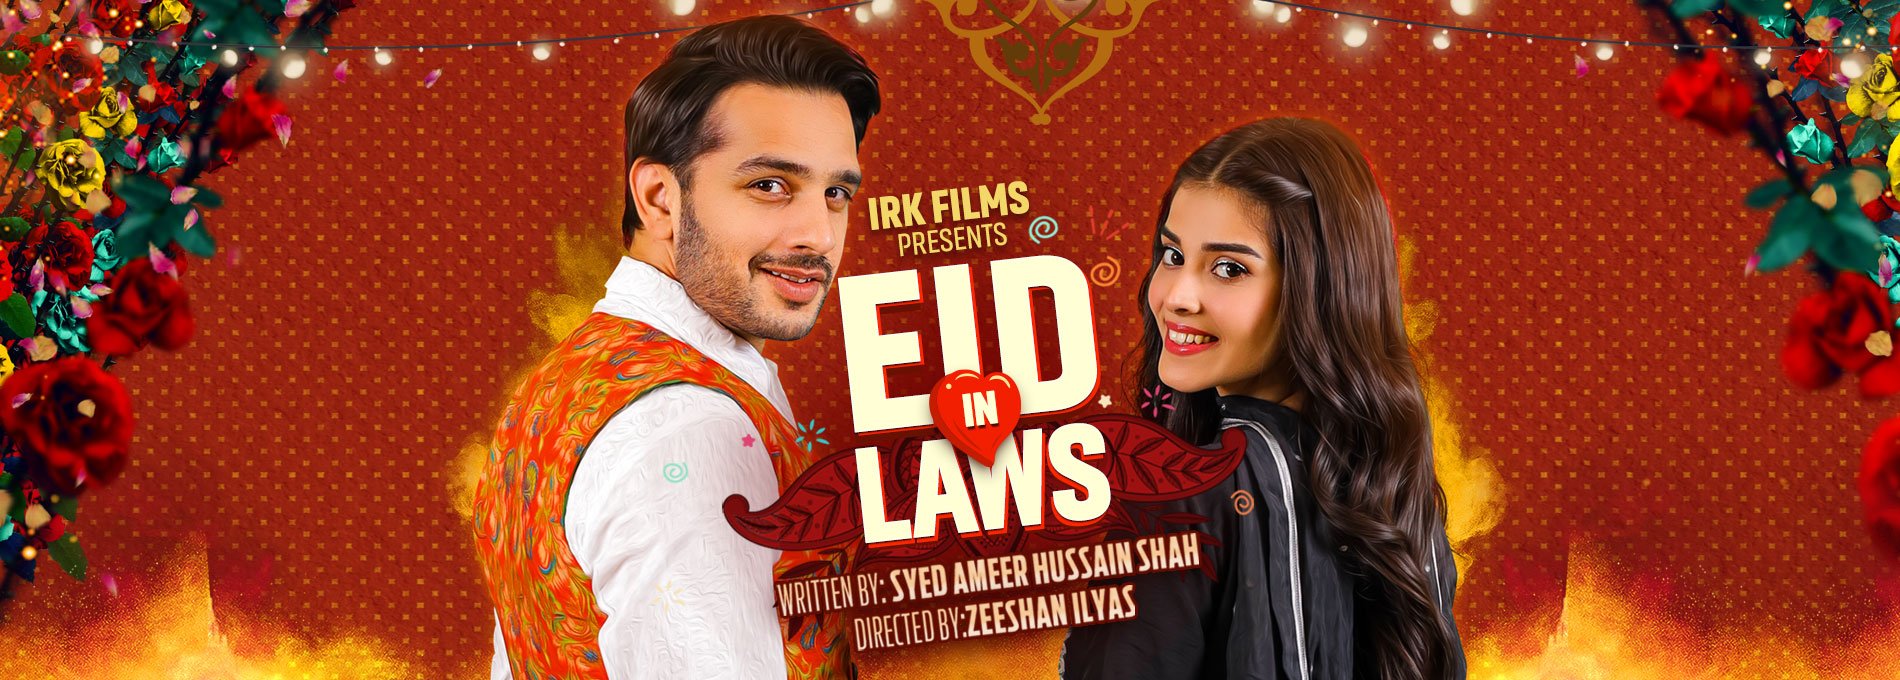 Eid In Laws